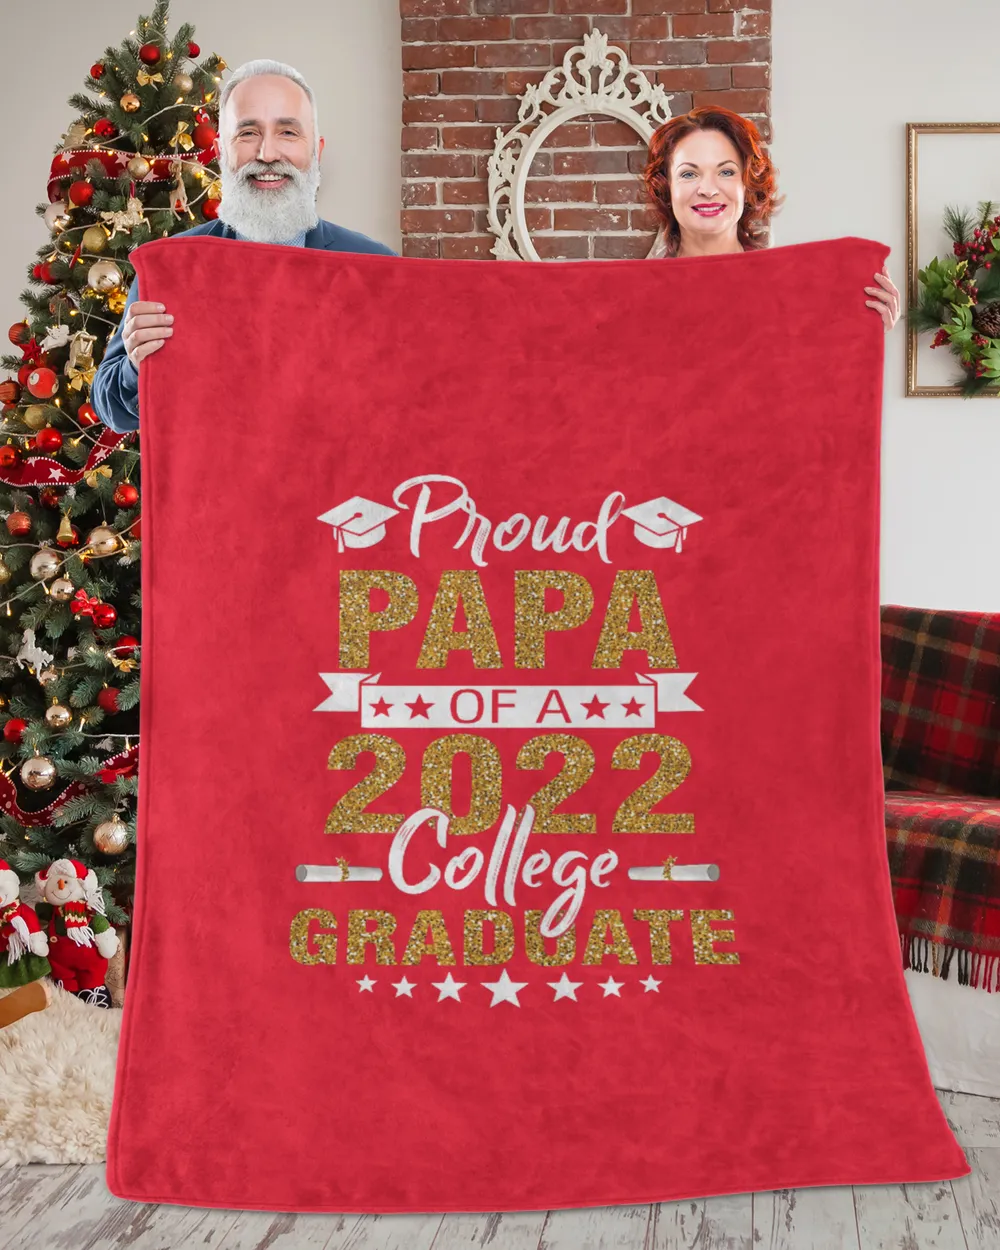 Proud Papa Of A 2022 College Graduate - Father Graduation T-Shirt